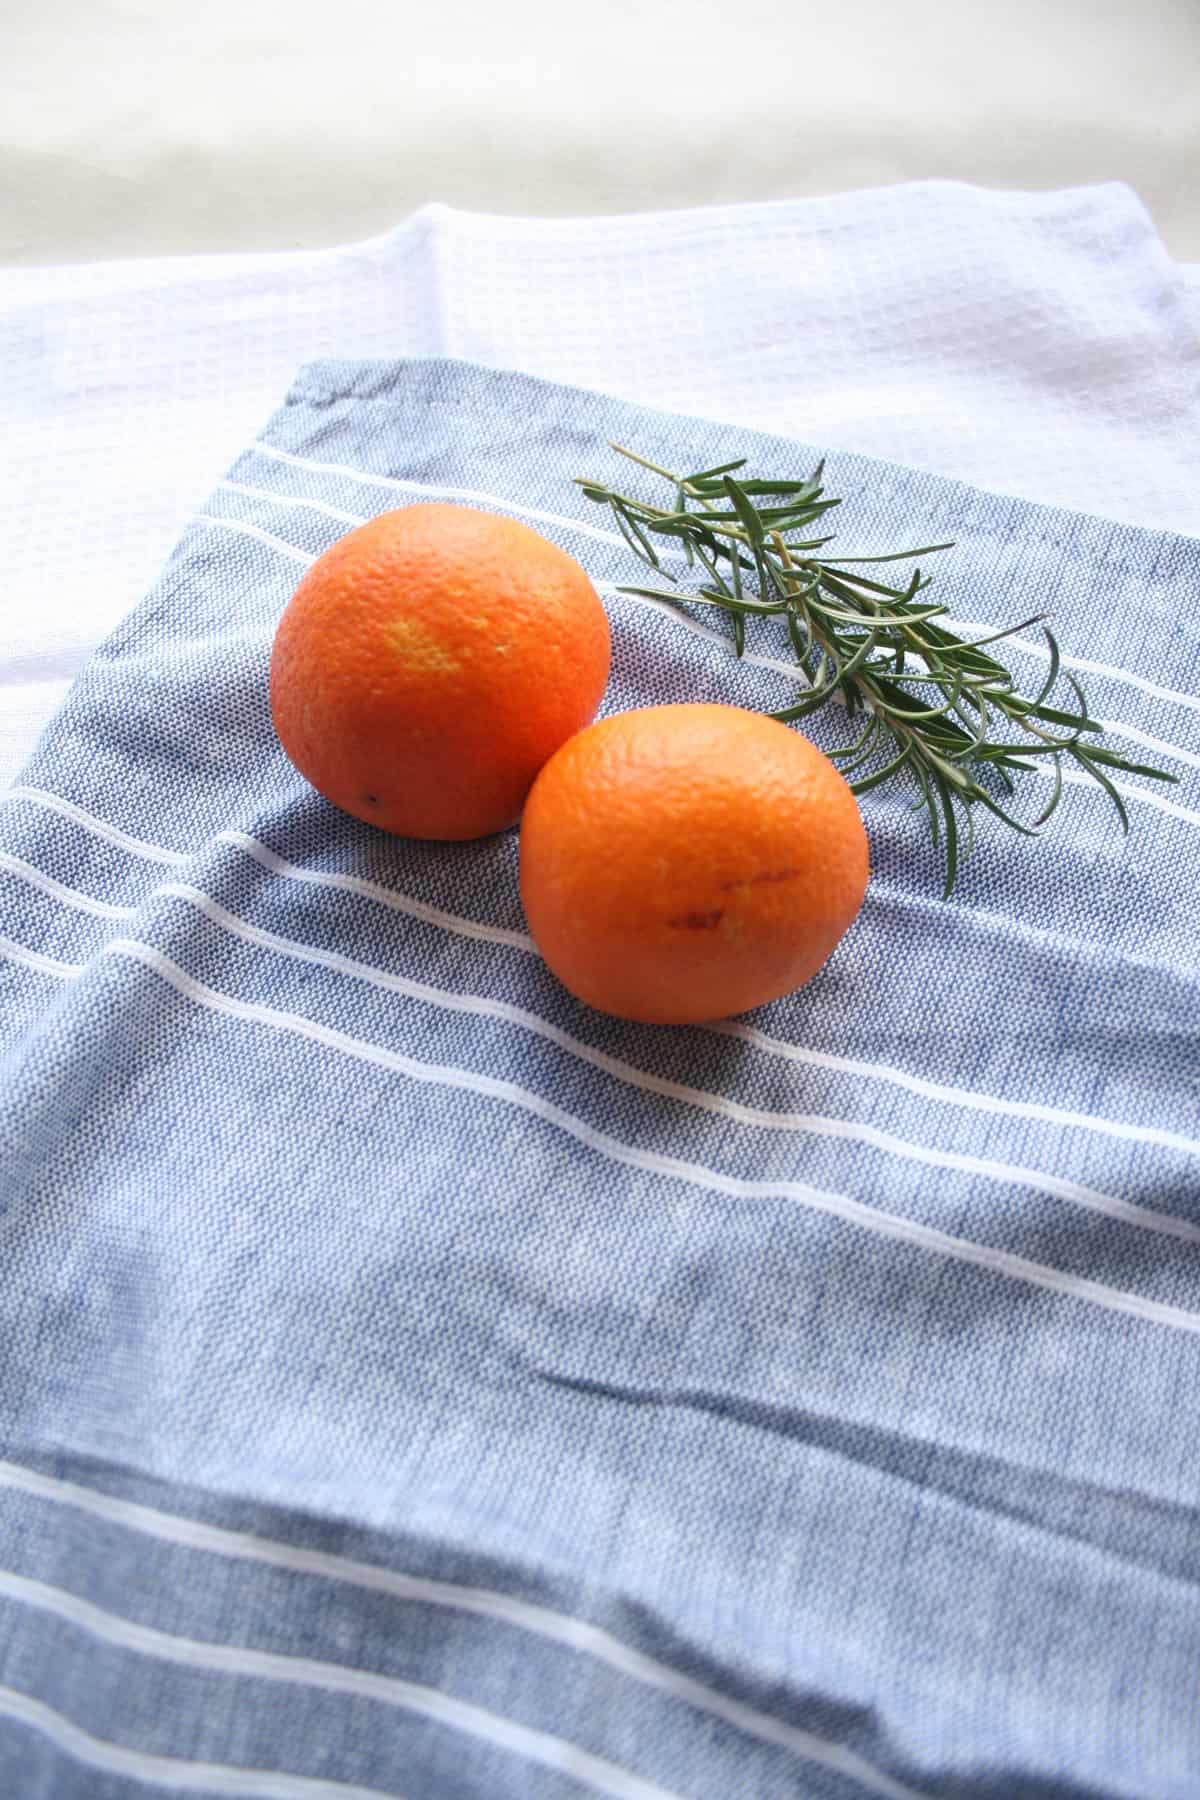 Oranges and rosemary on napkin. 